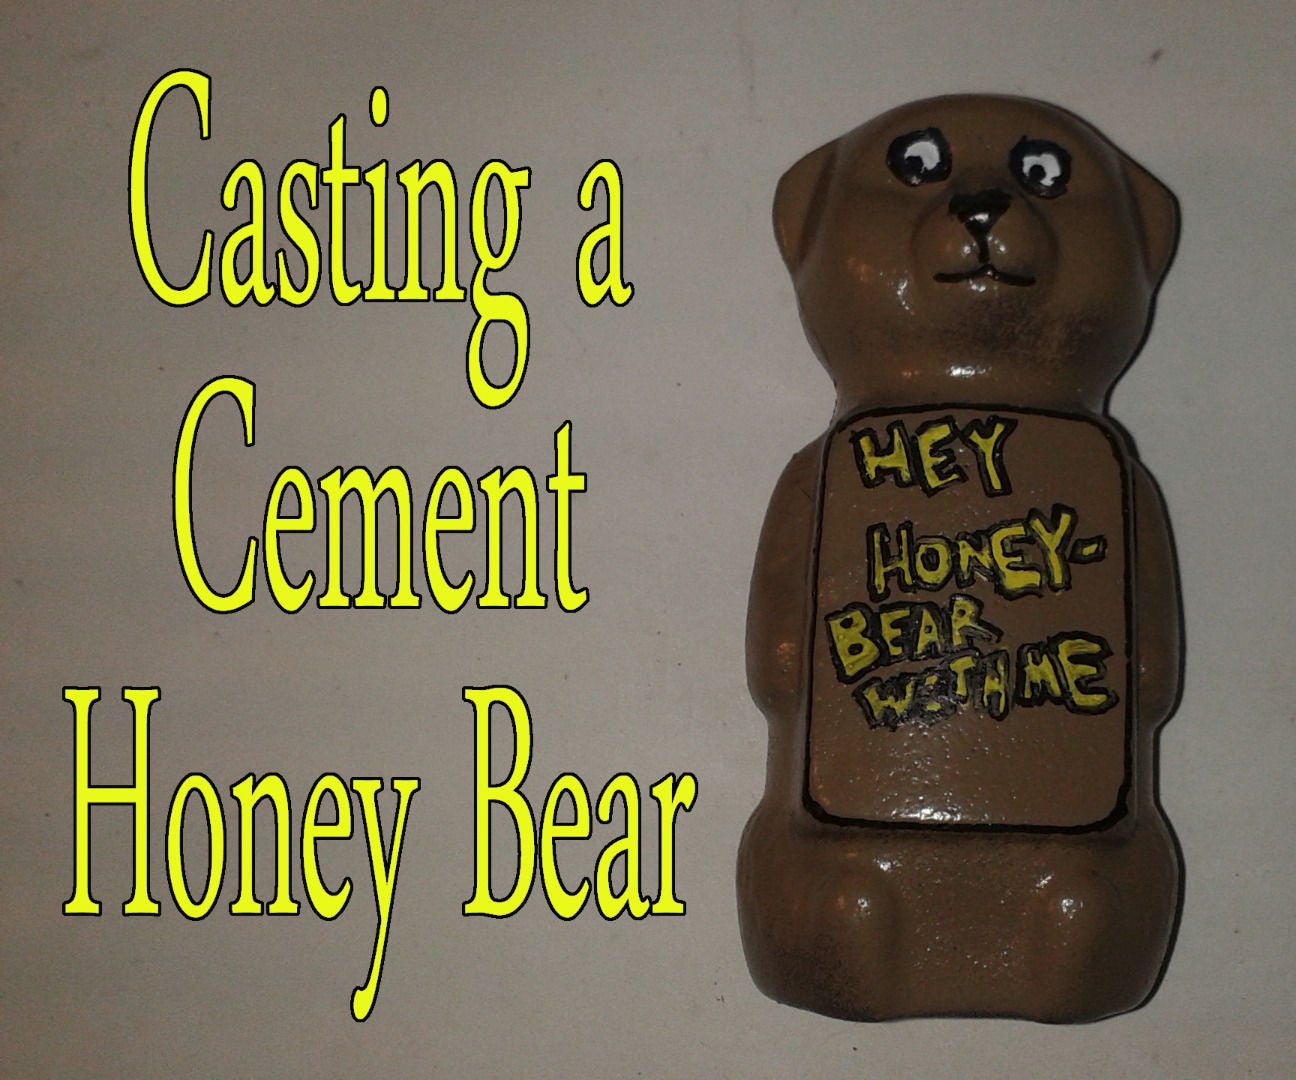 Casting a Cement Honey Bear